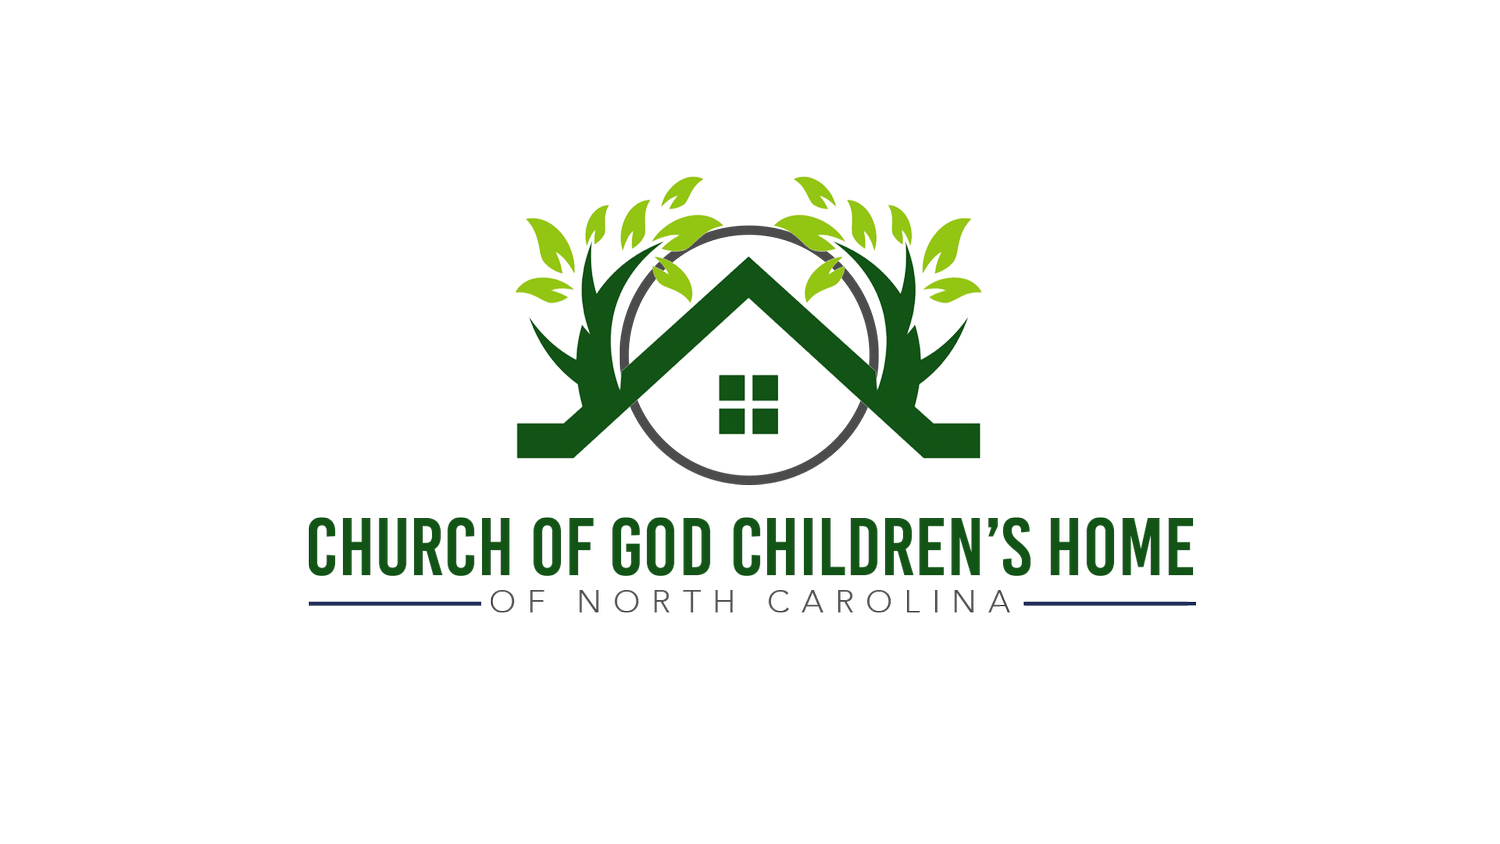 Church of God Children's Home of North Carolina